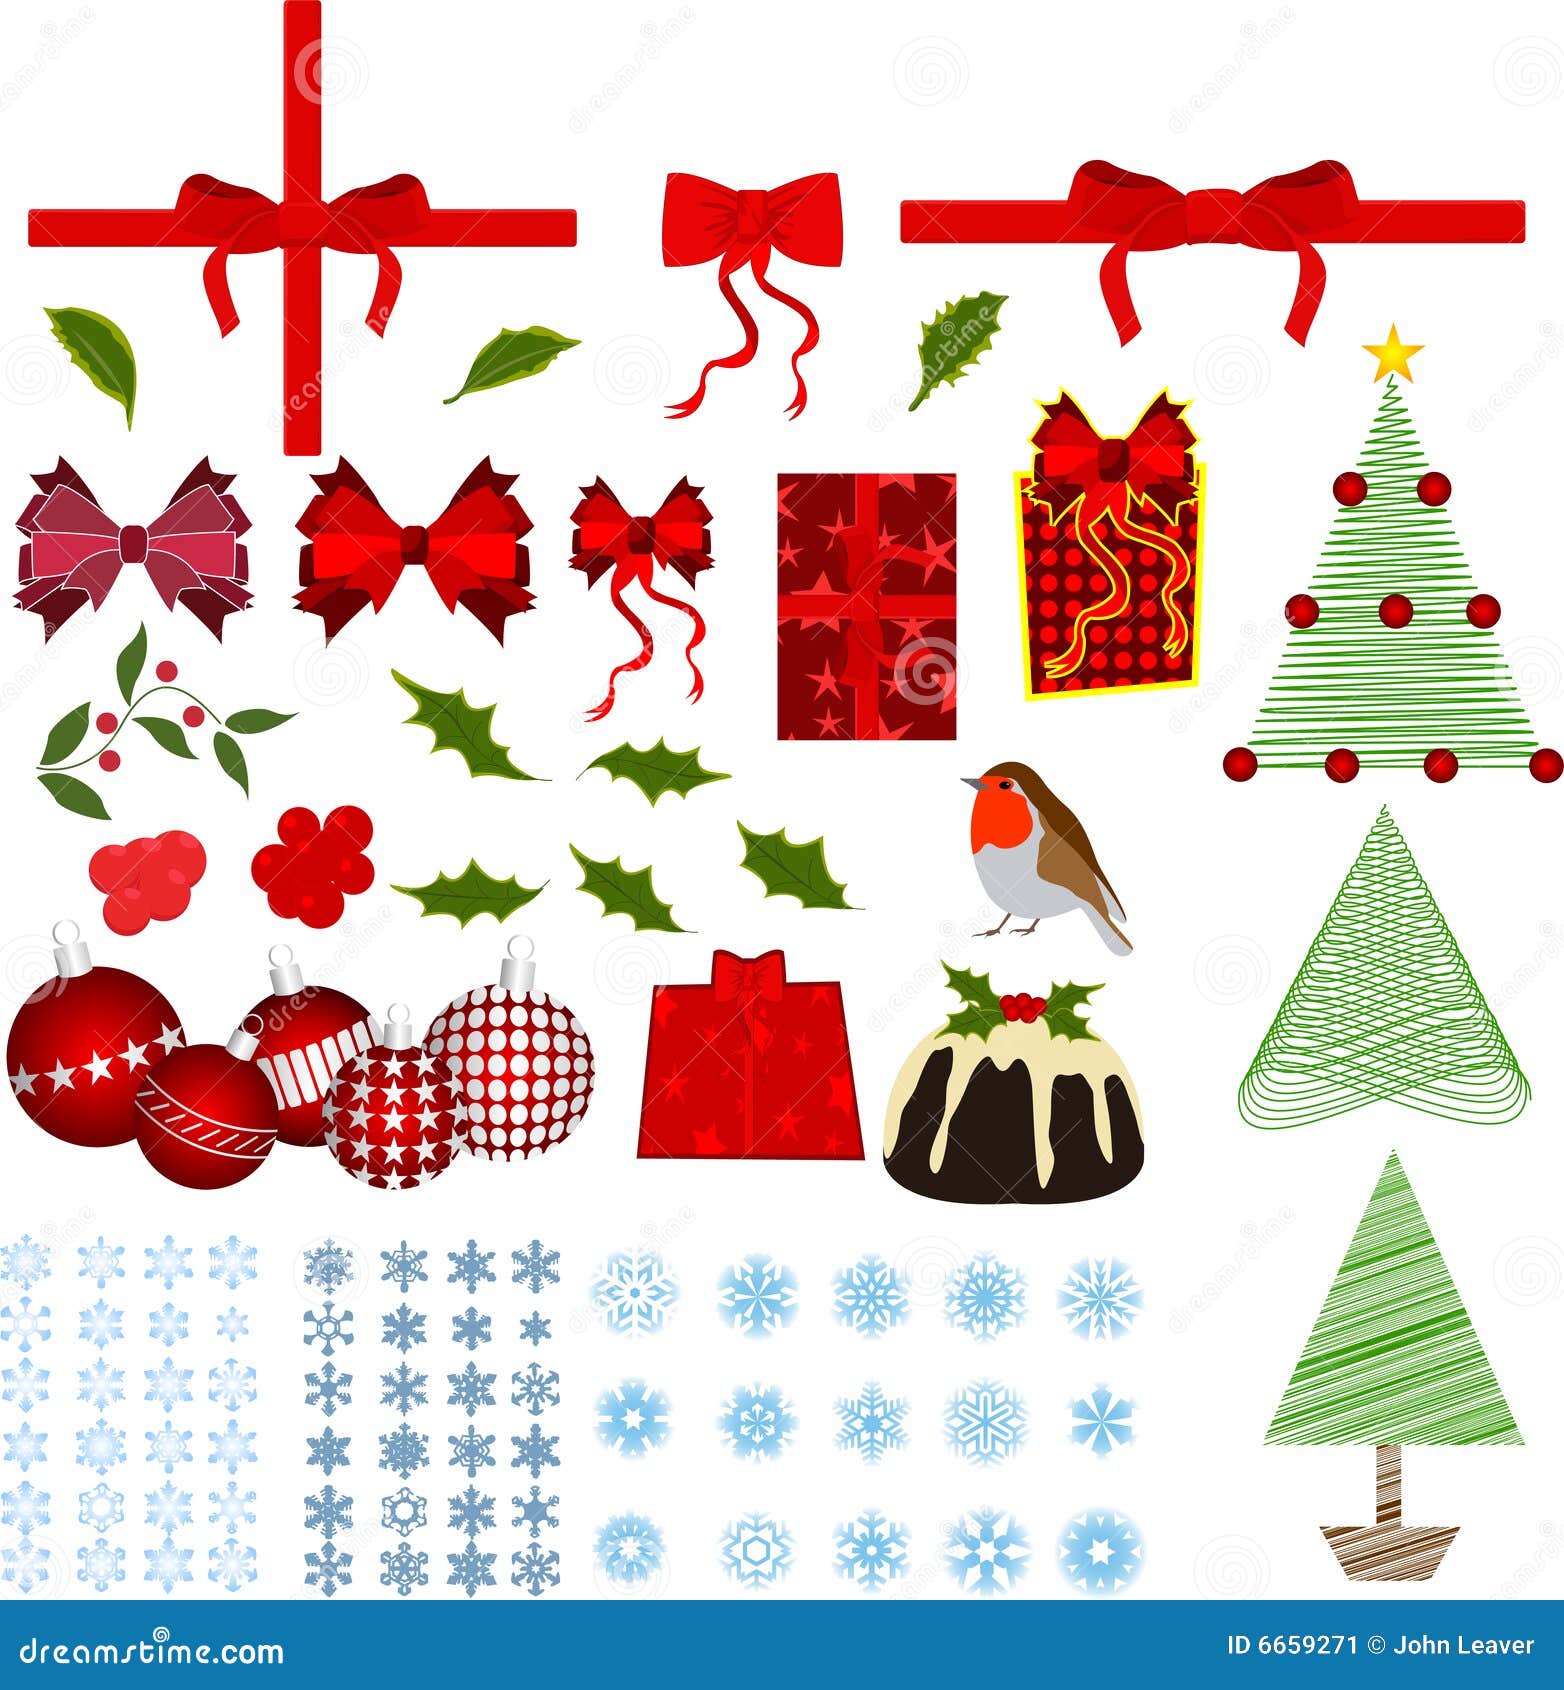 christmas-elements-illustration-set-vector-download